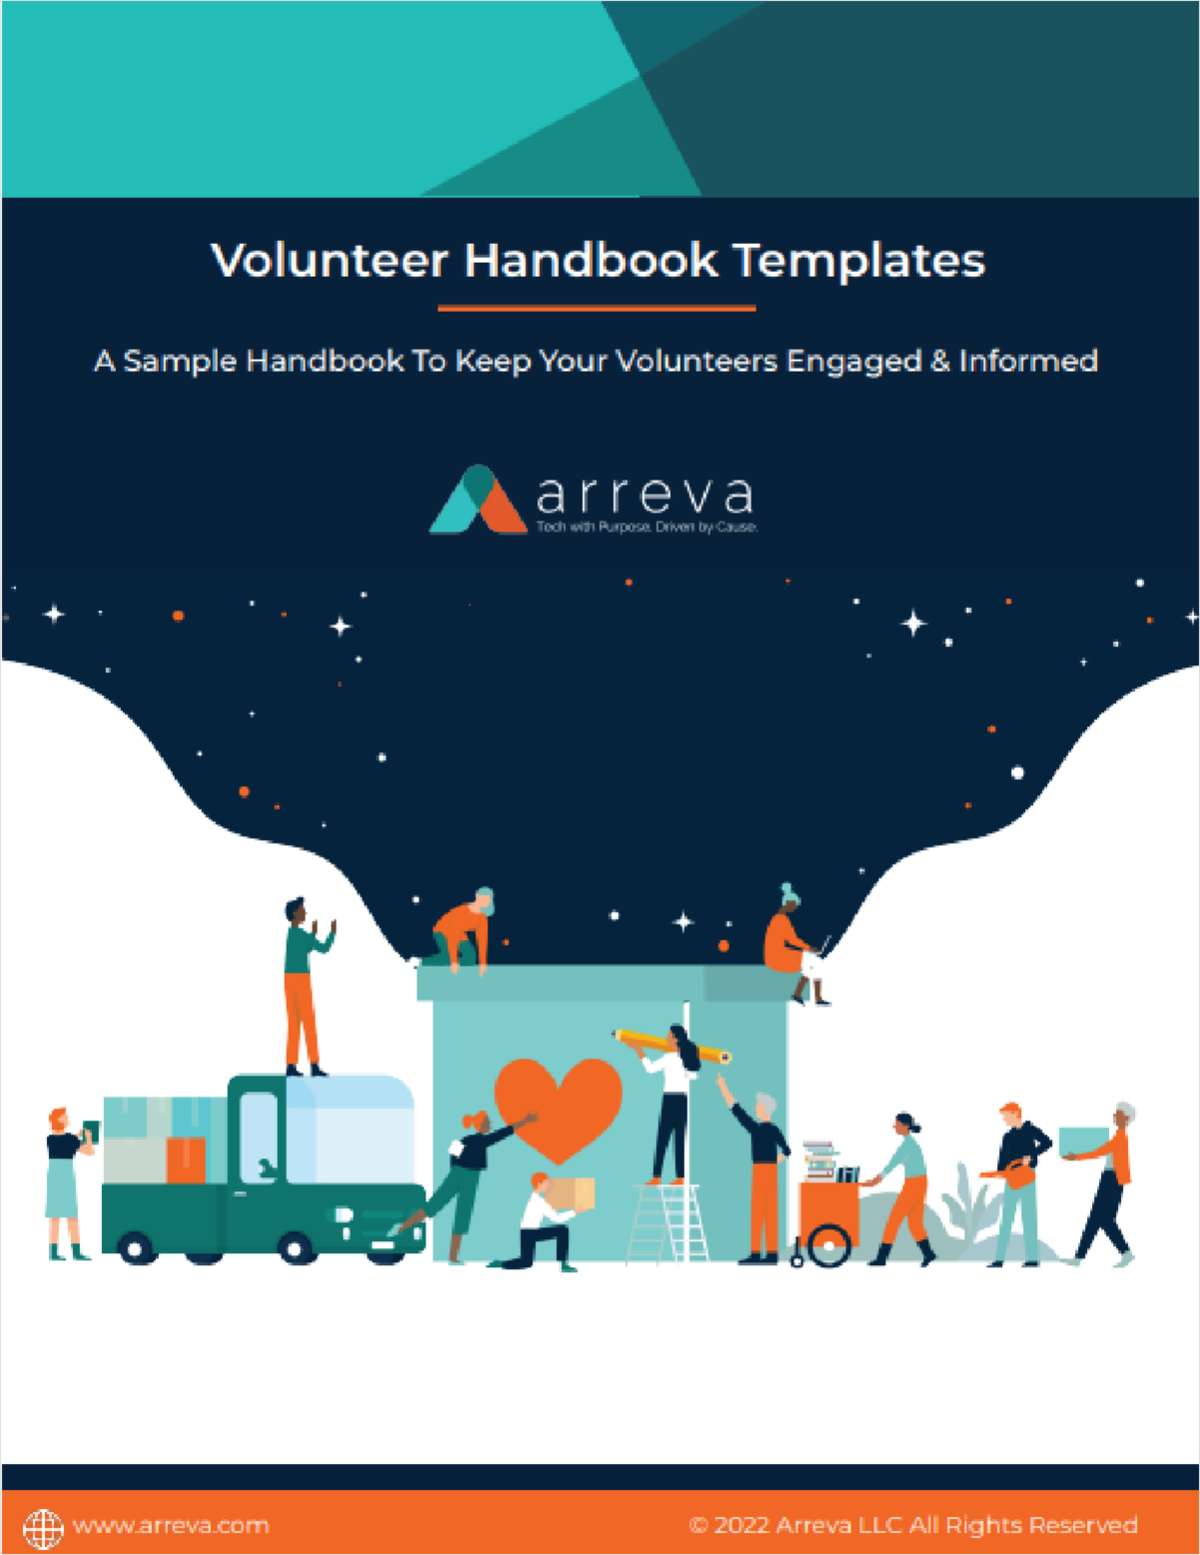 Volunteer Handbook Templates, Free Arreva Howto Guide